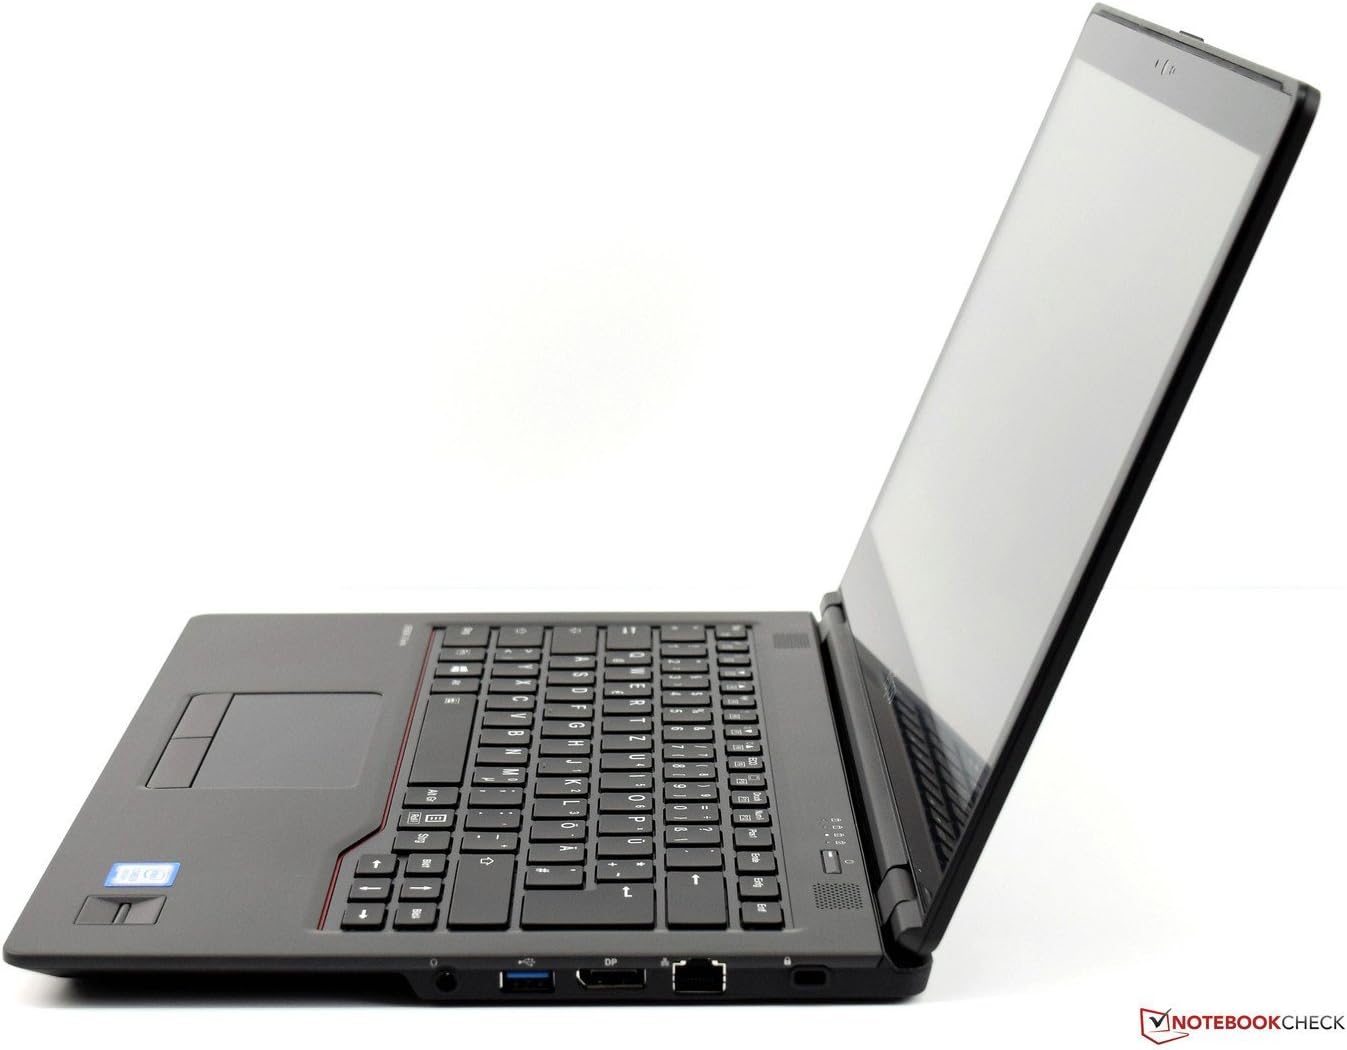 Portátil Fujitsu LifeBook U748 Core i5 8ª Ger 16GB SSD256